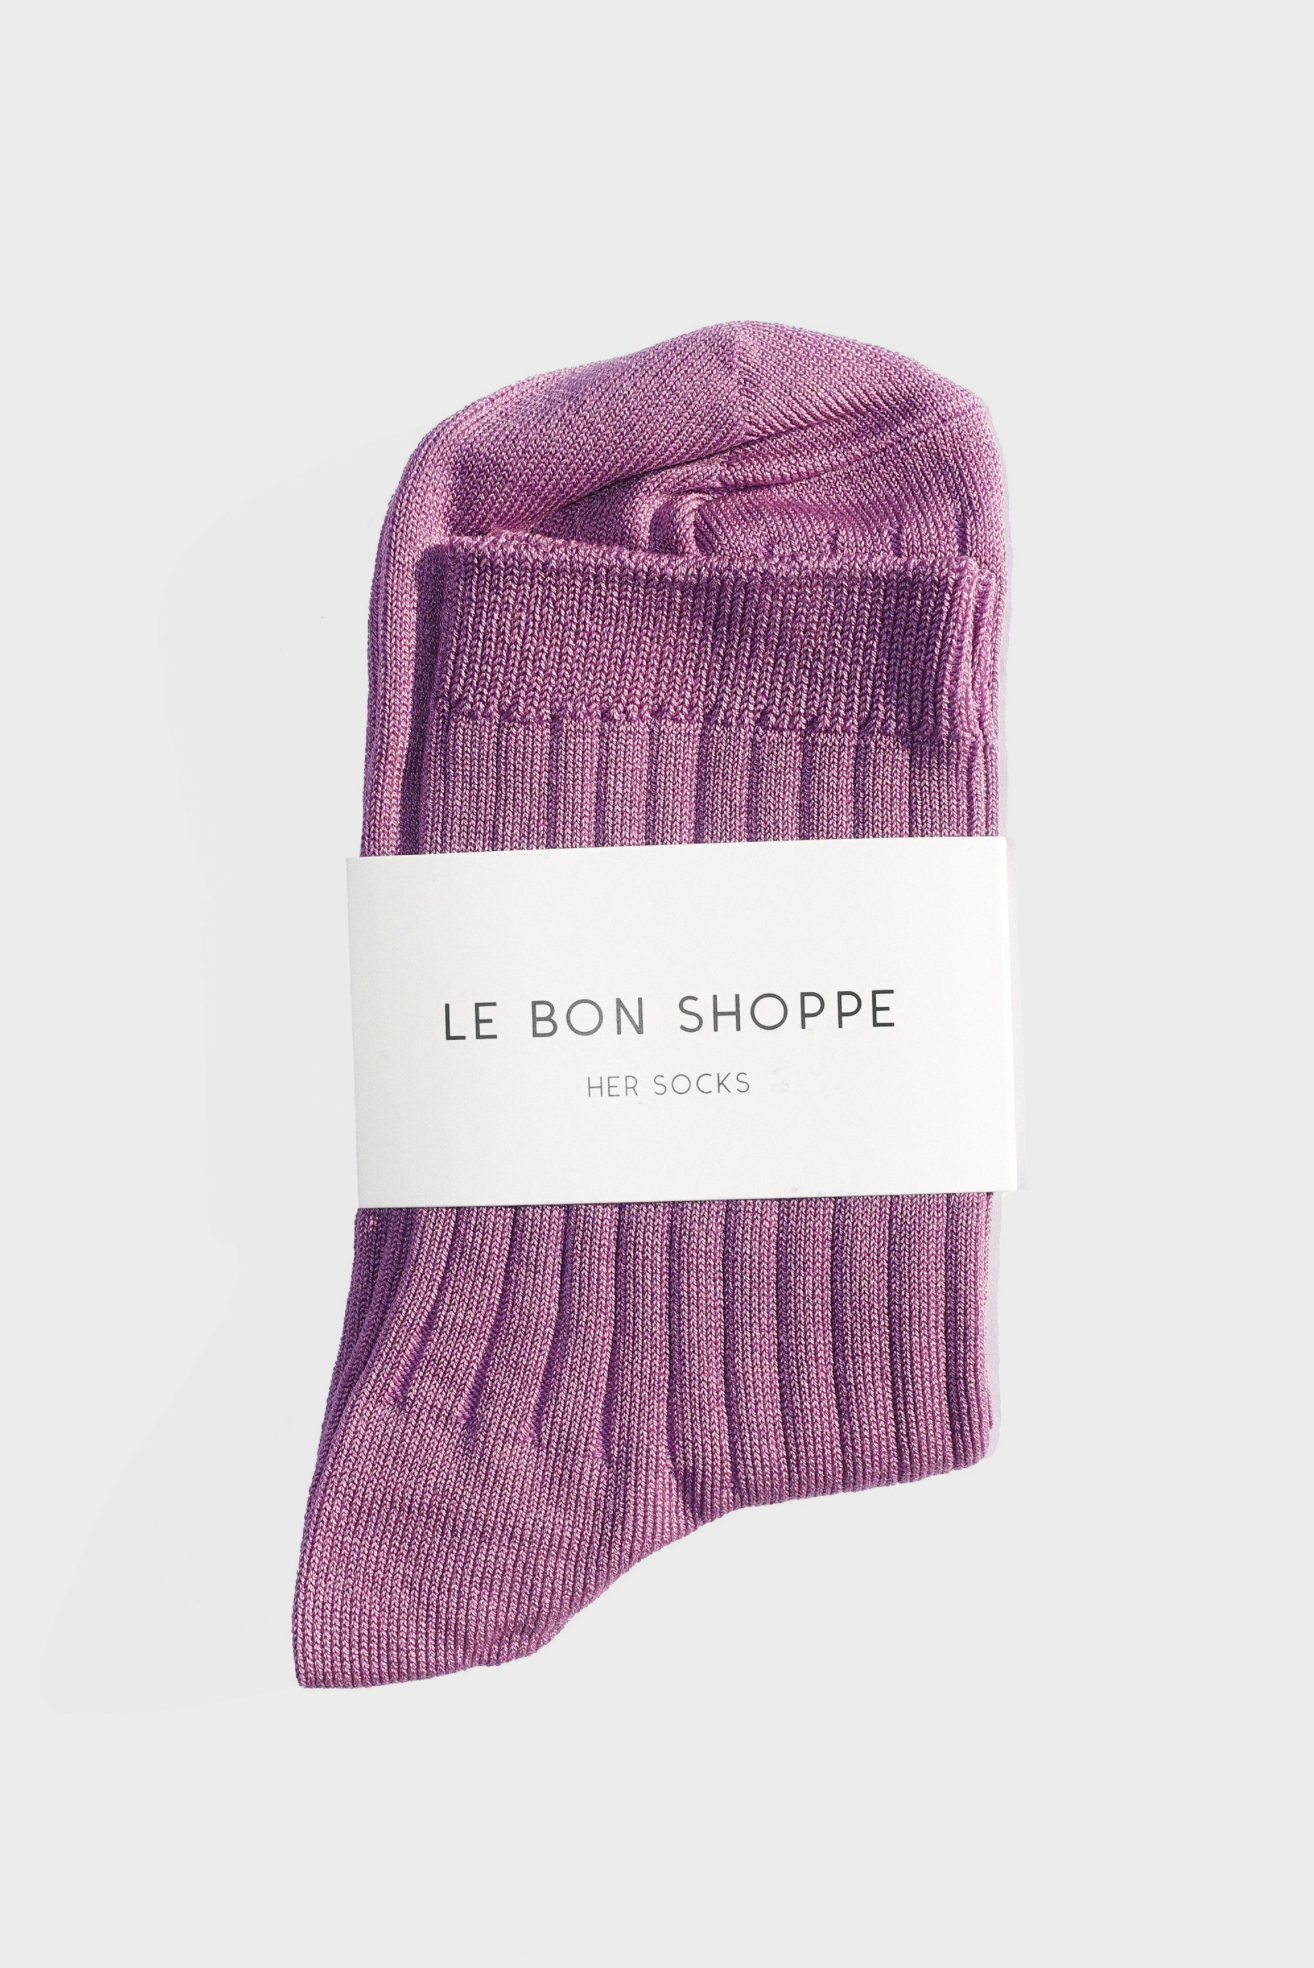 Her Socks in Orchid by Le Bon Shoppe